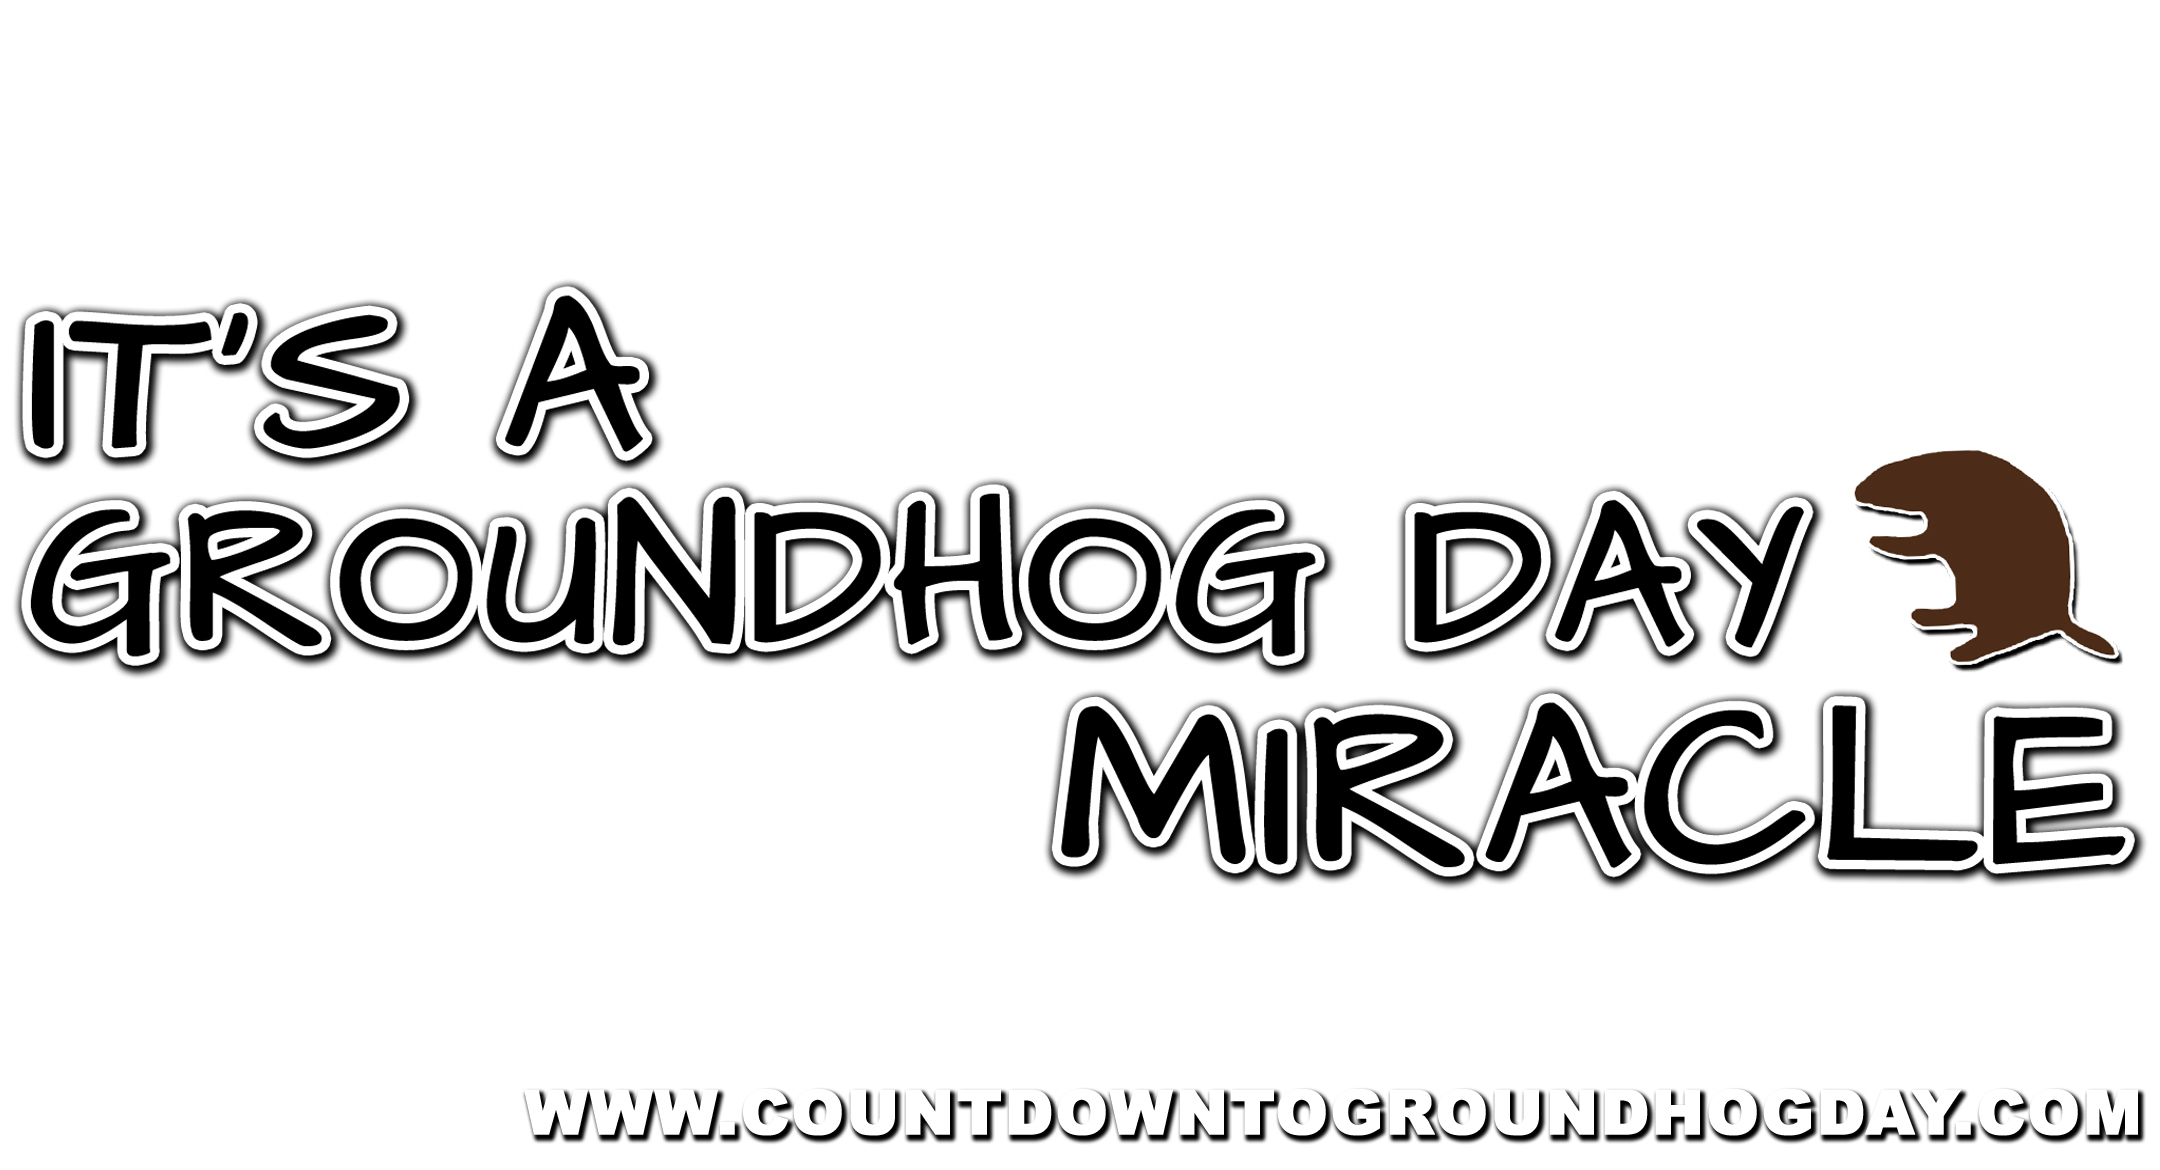 Groundhog Day miracle